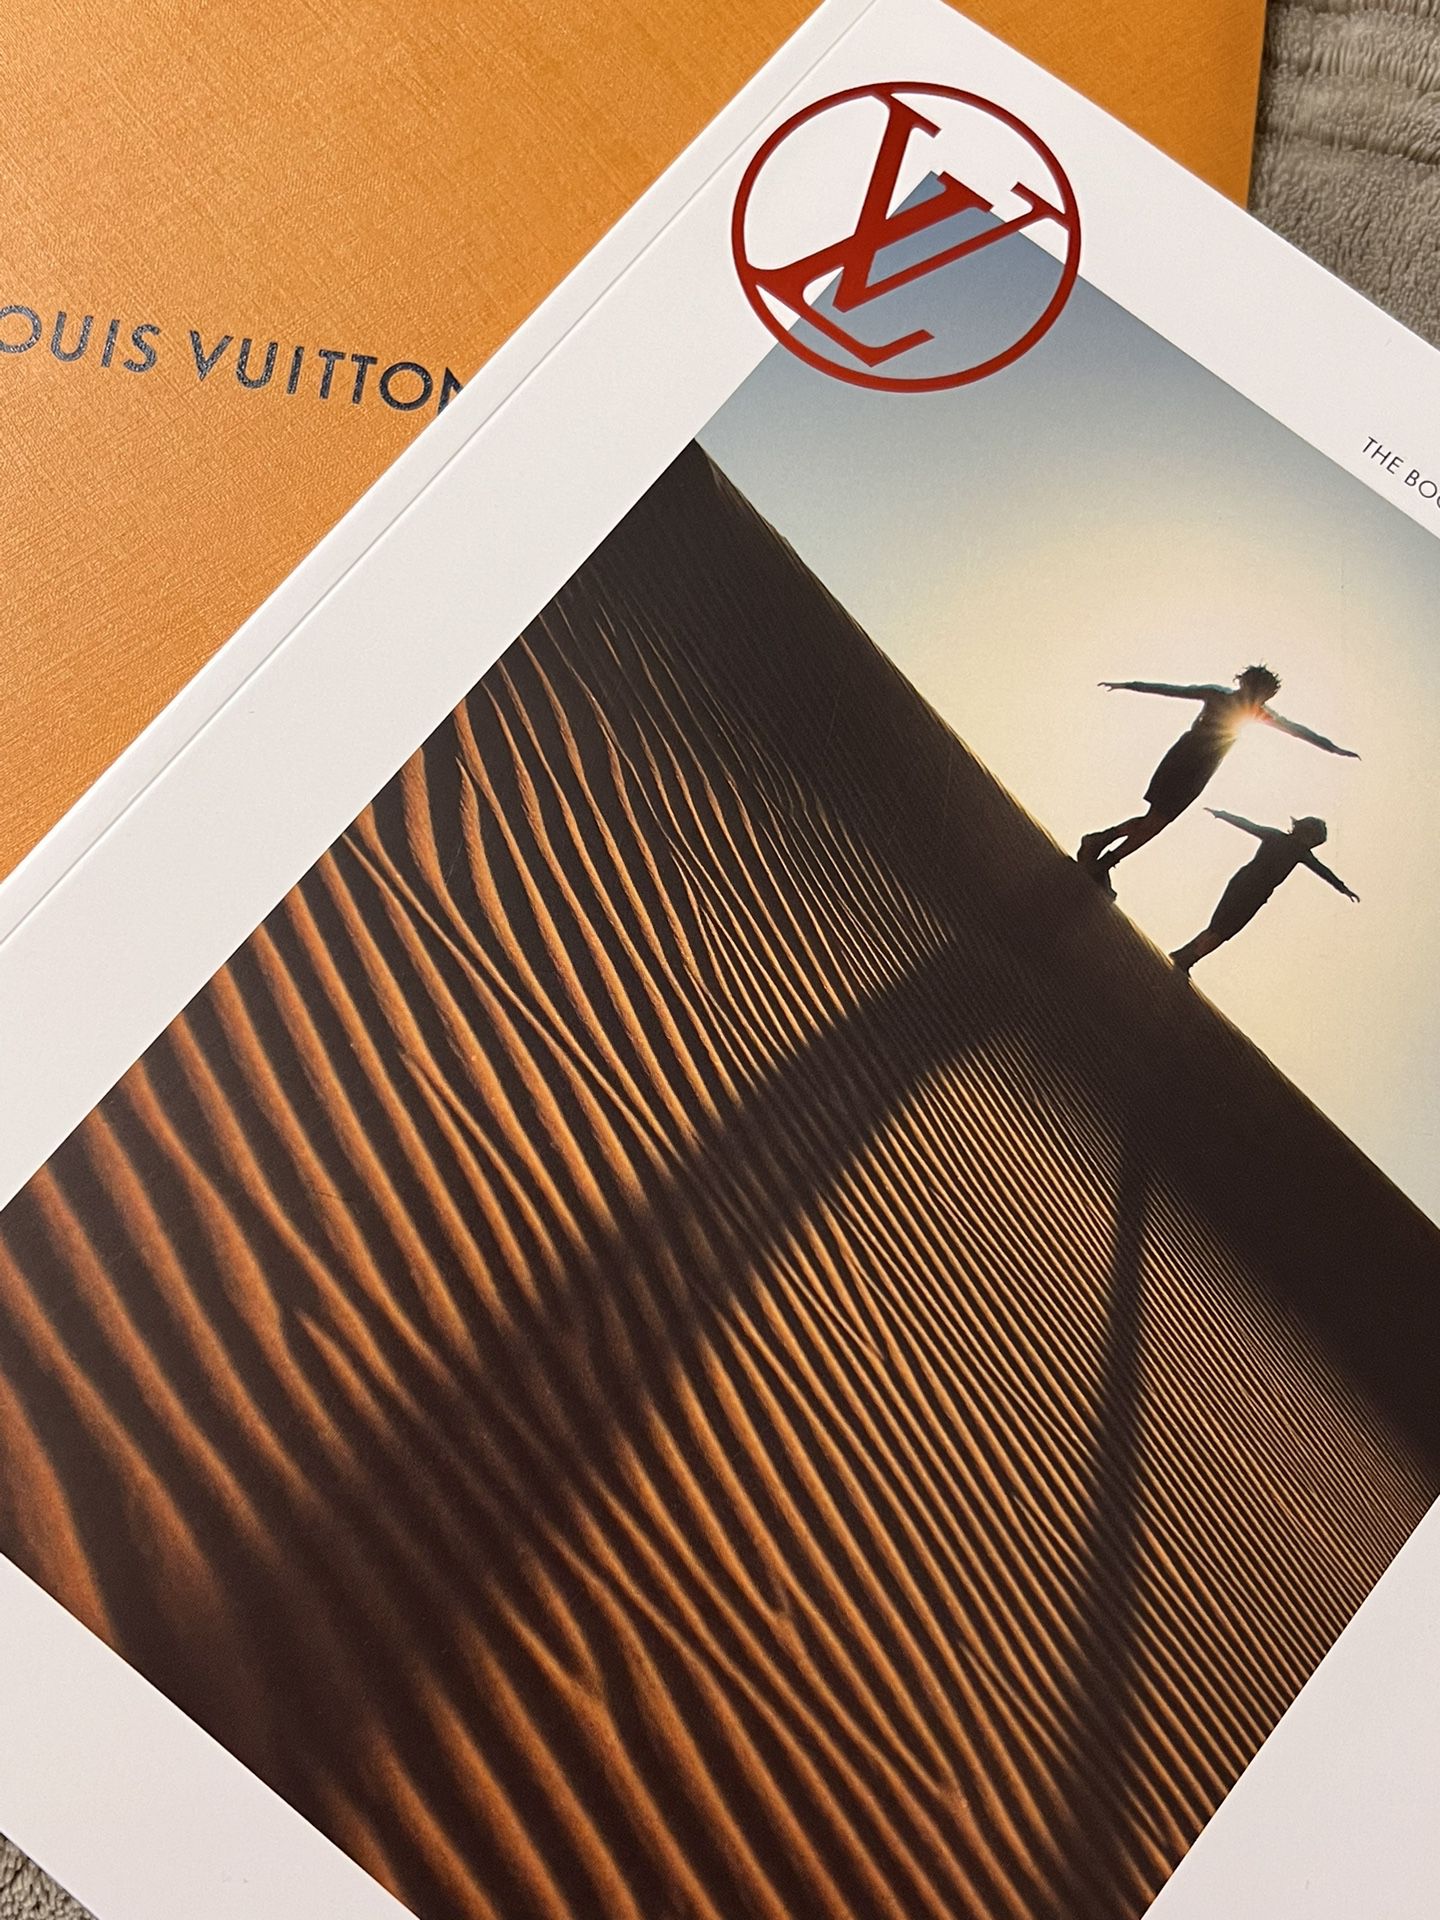 Louis Vuitton The Book Catalog 14 for Sale in Avondale, AZ - OfferUp